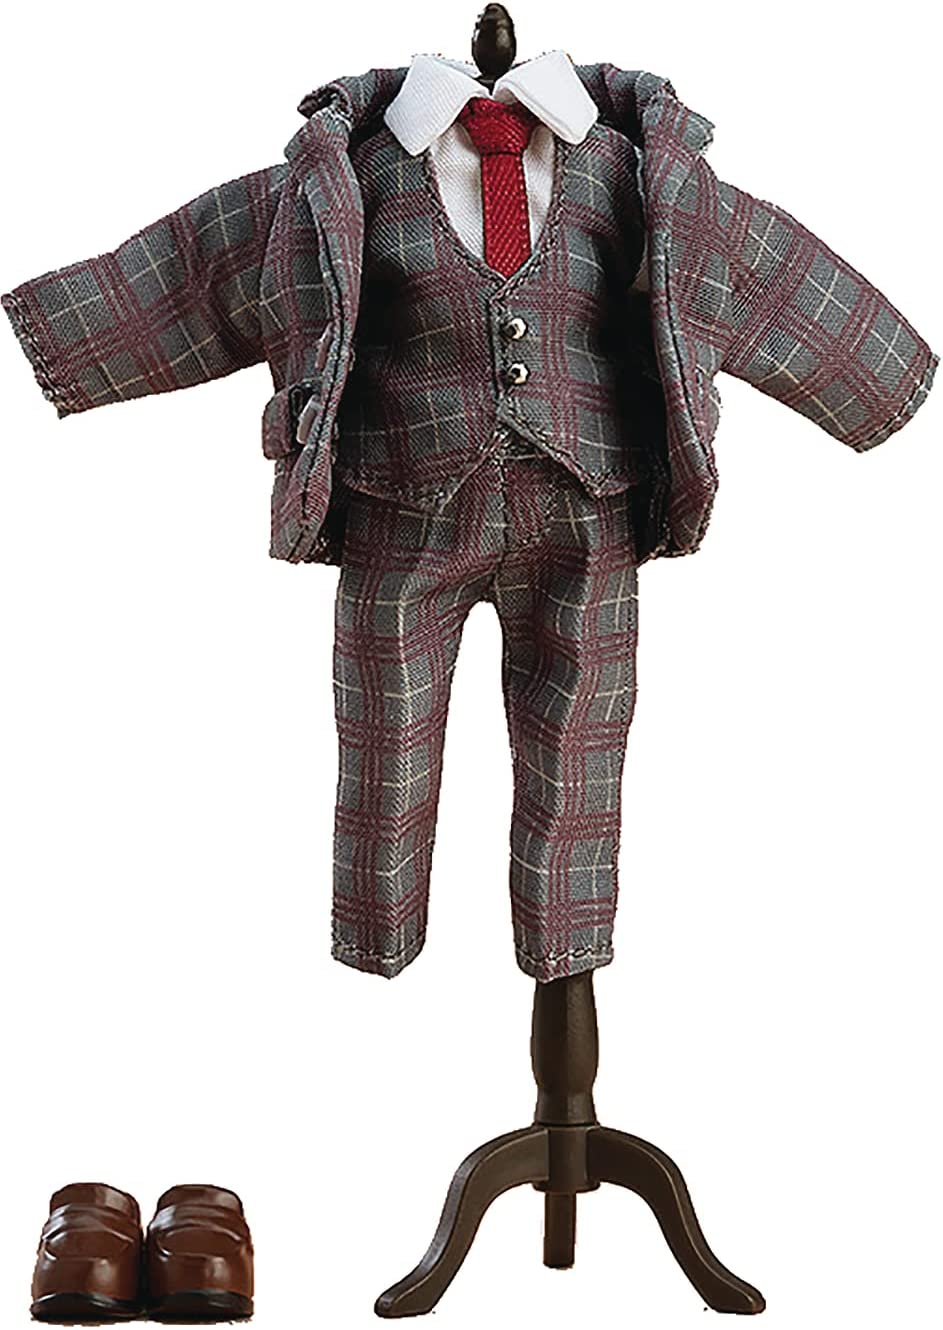 Good Smile Company – Nendoroid-Puppen-Outfit-Set, Anzug, karierte Version